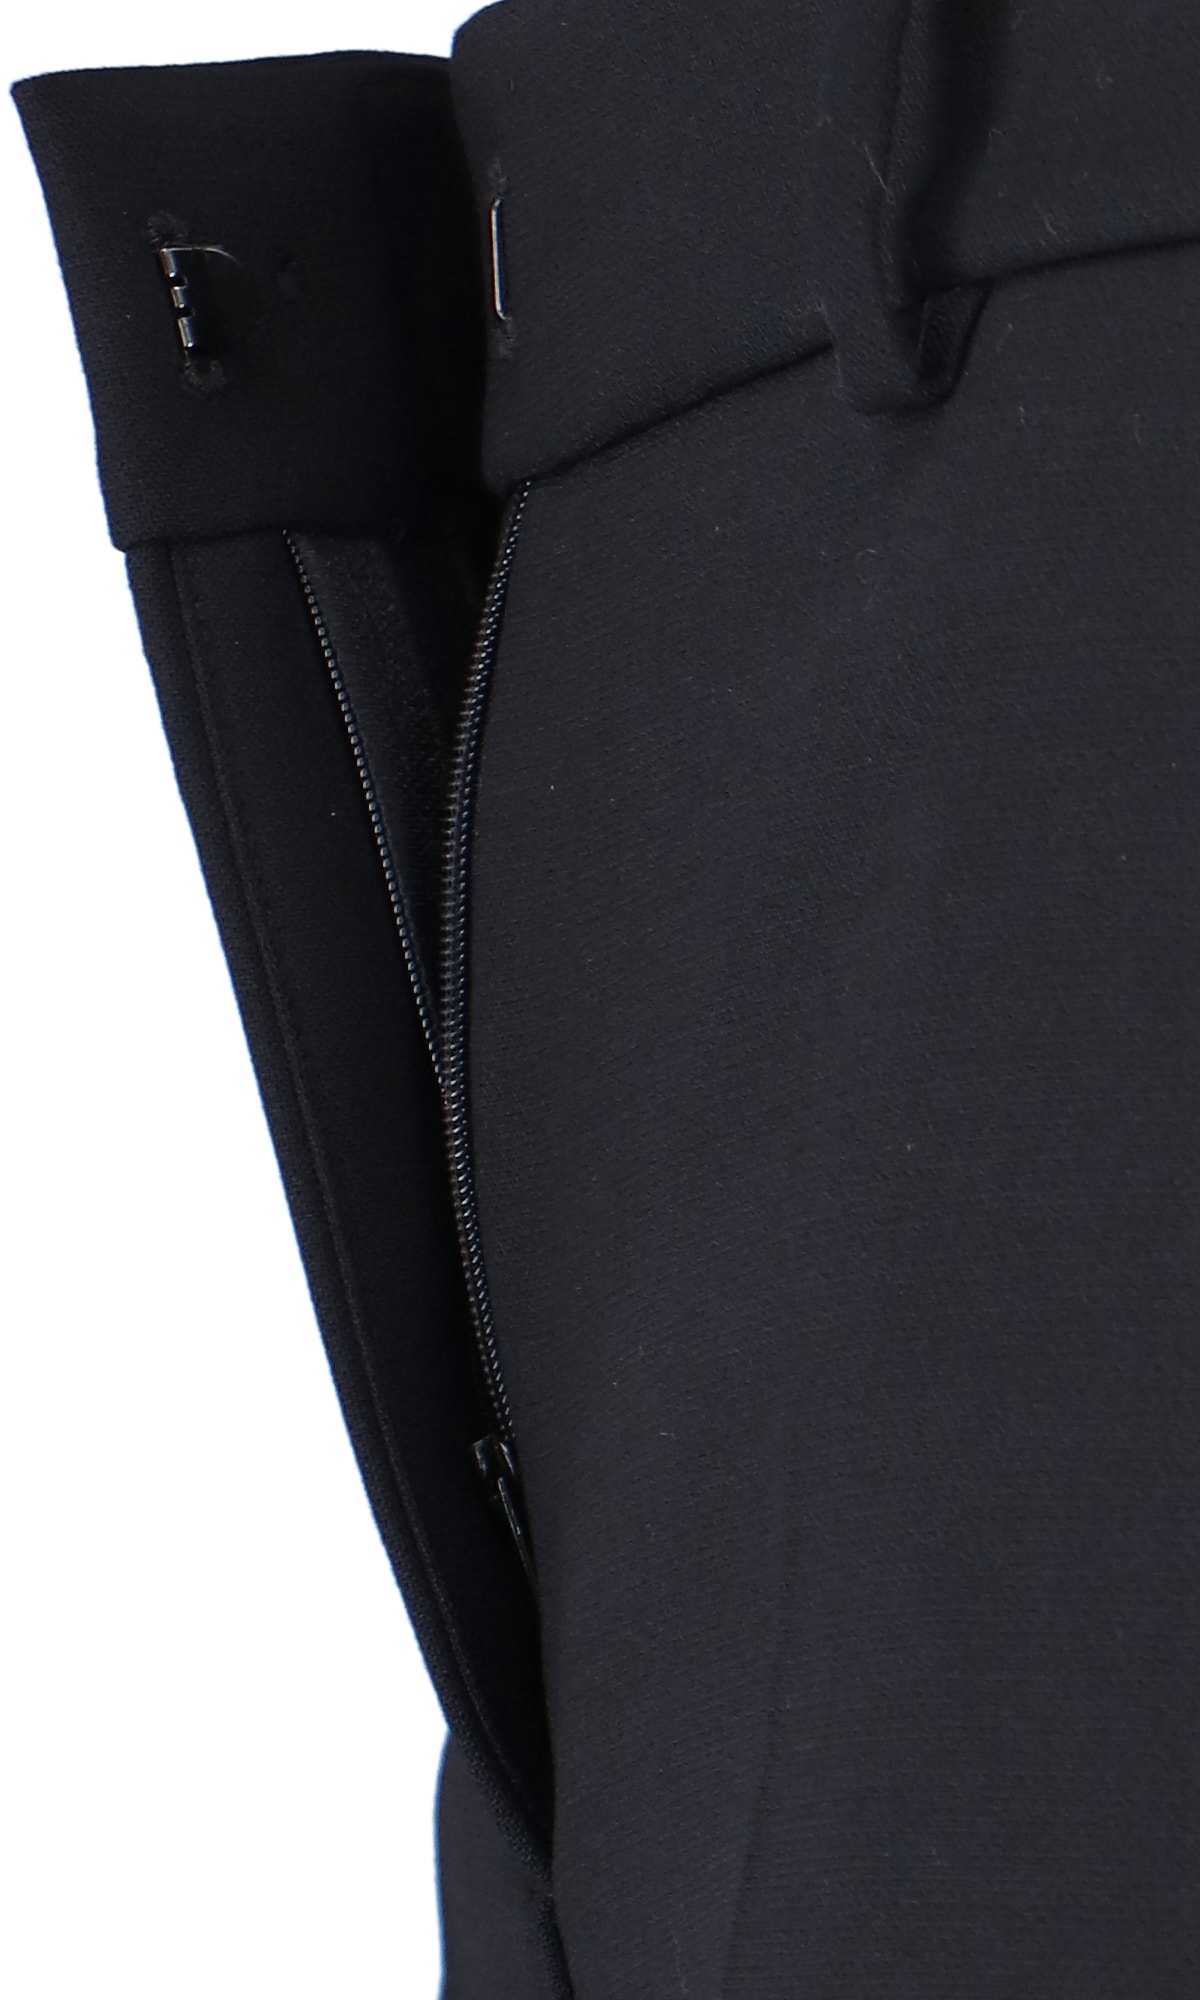 Vila leather look high waisted skinny pants in black